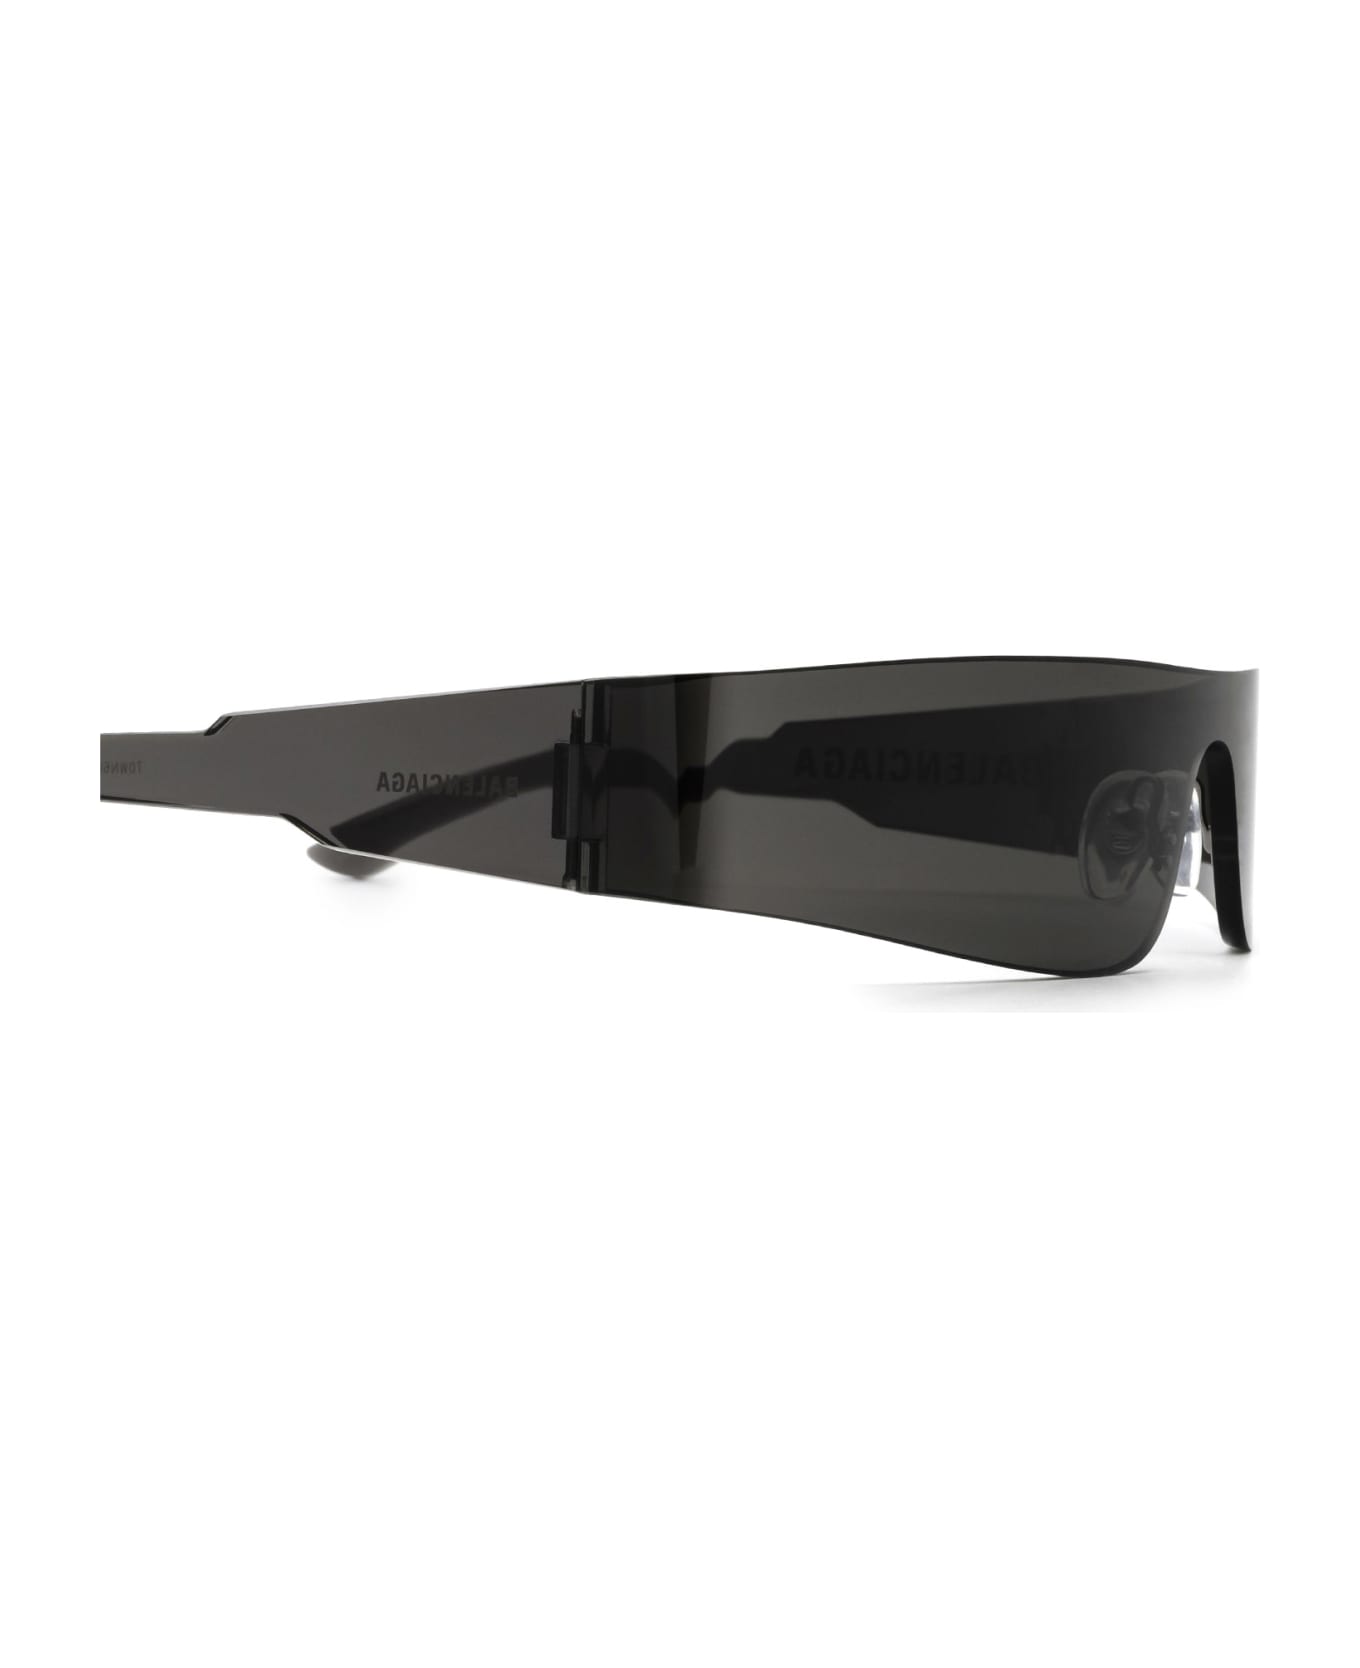 Balenciaga Eyewear Bb0041s Grey Sunglasses - Grey